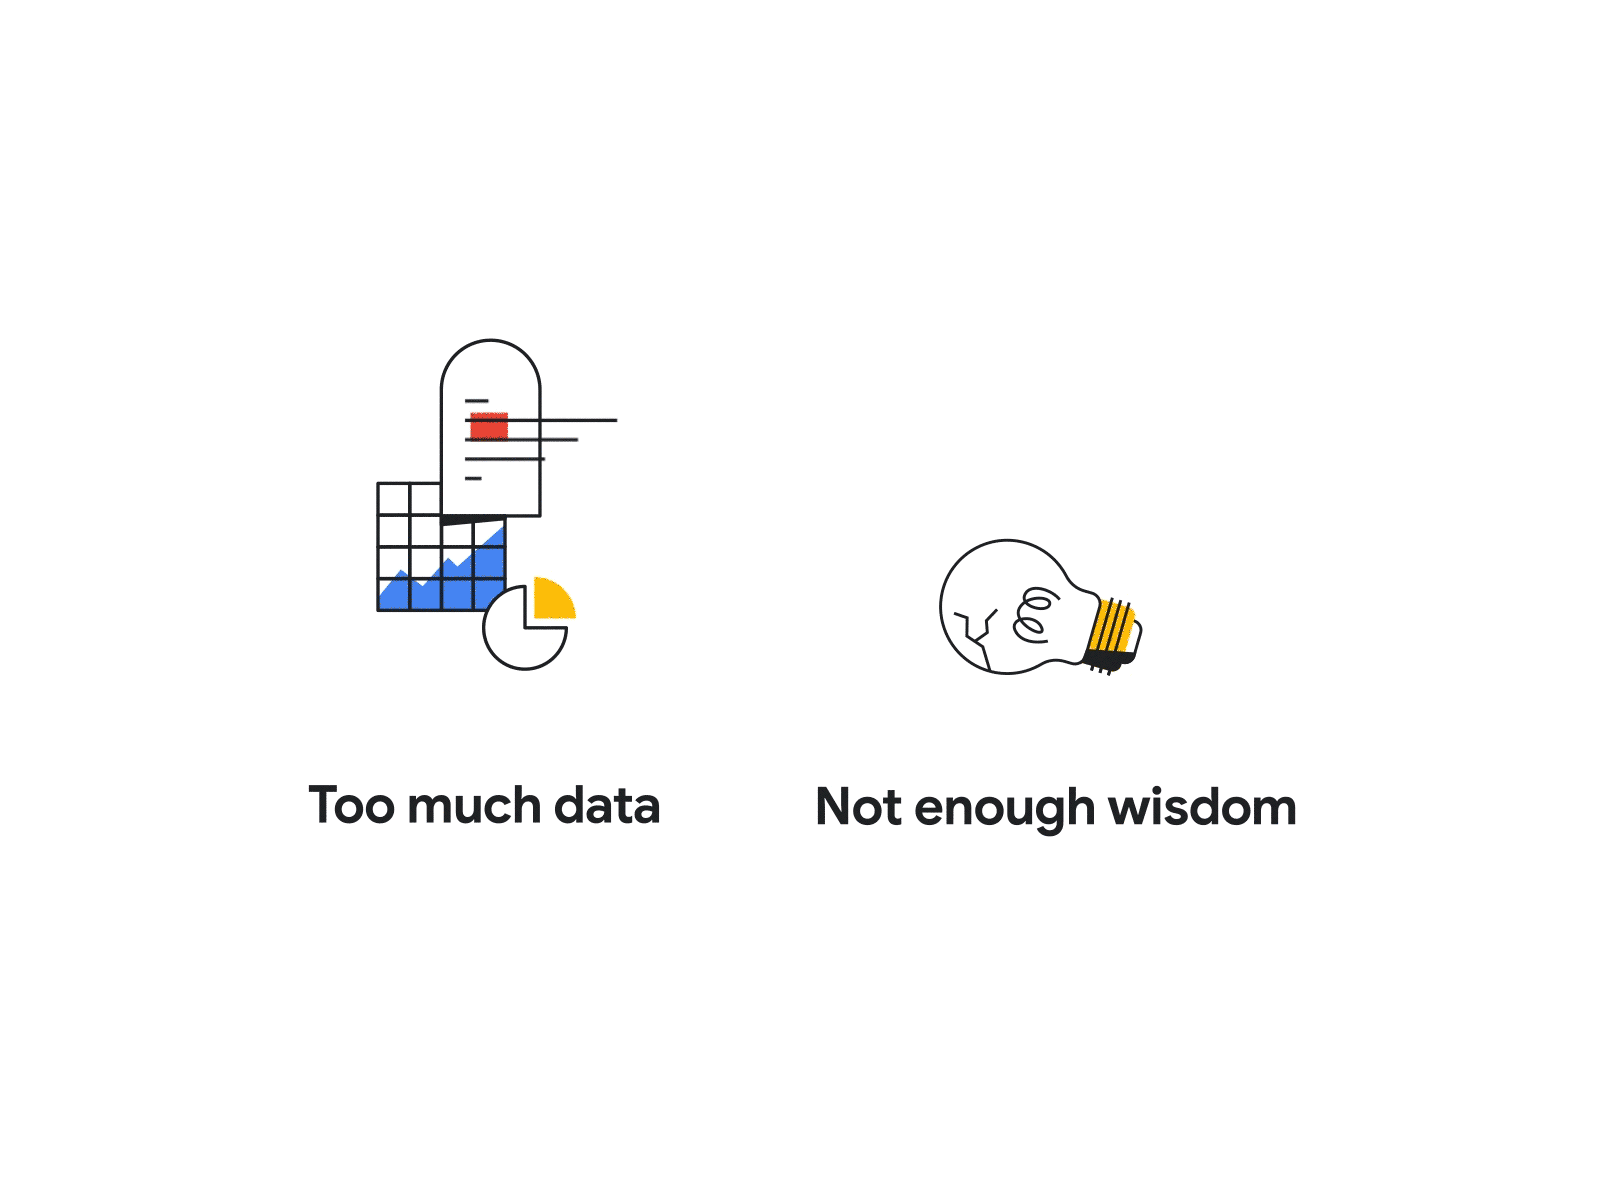 Data and wisdom illustration